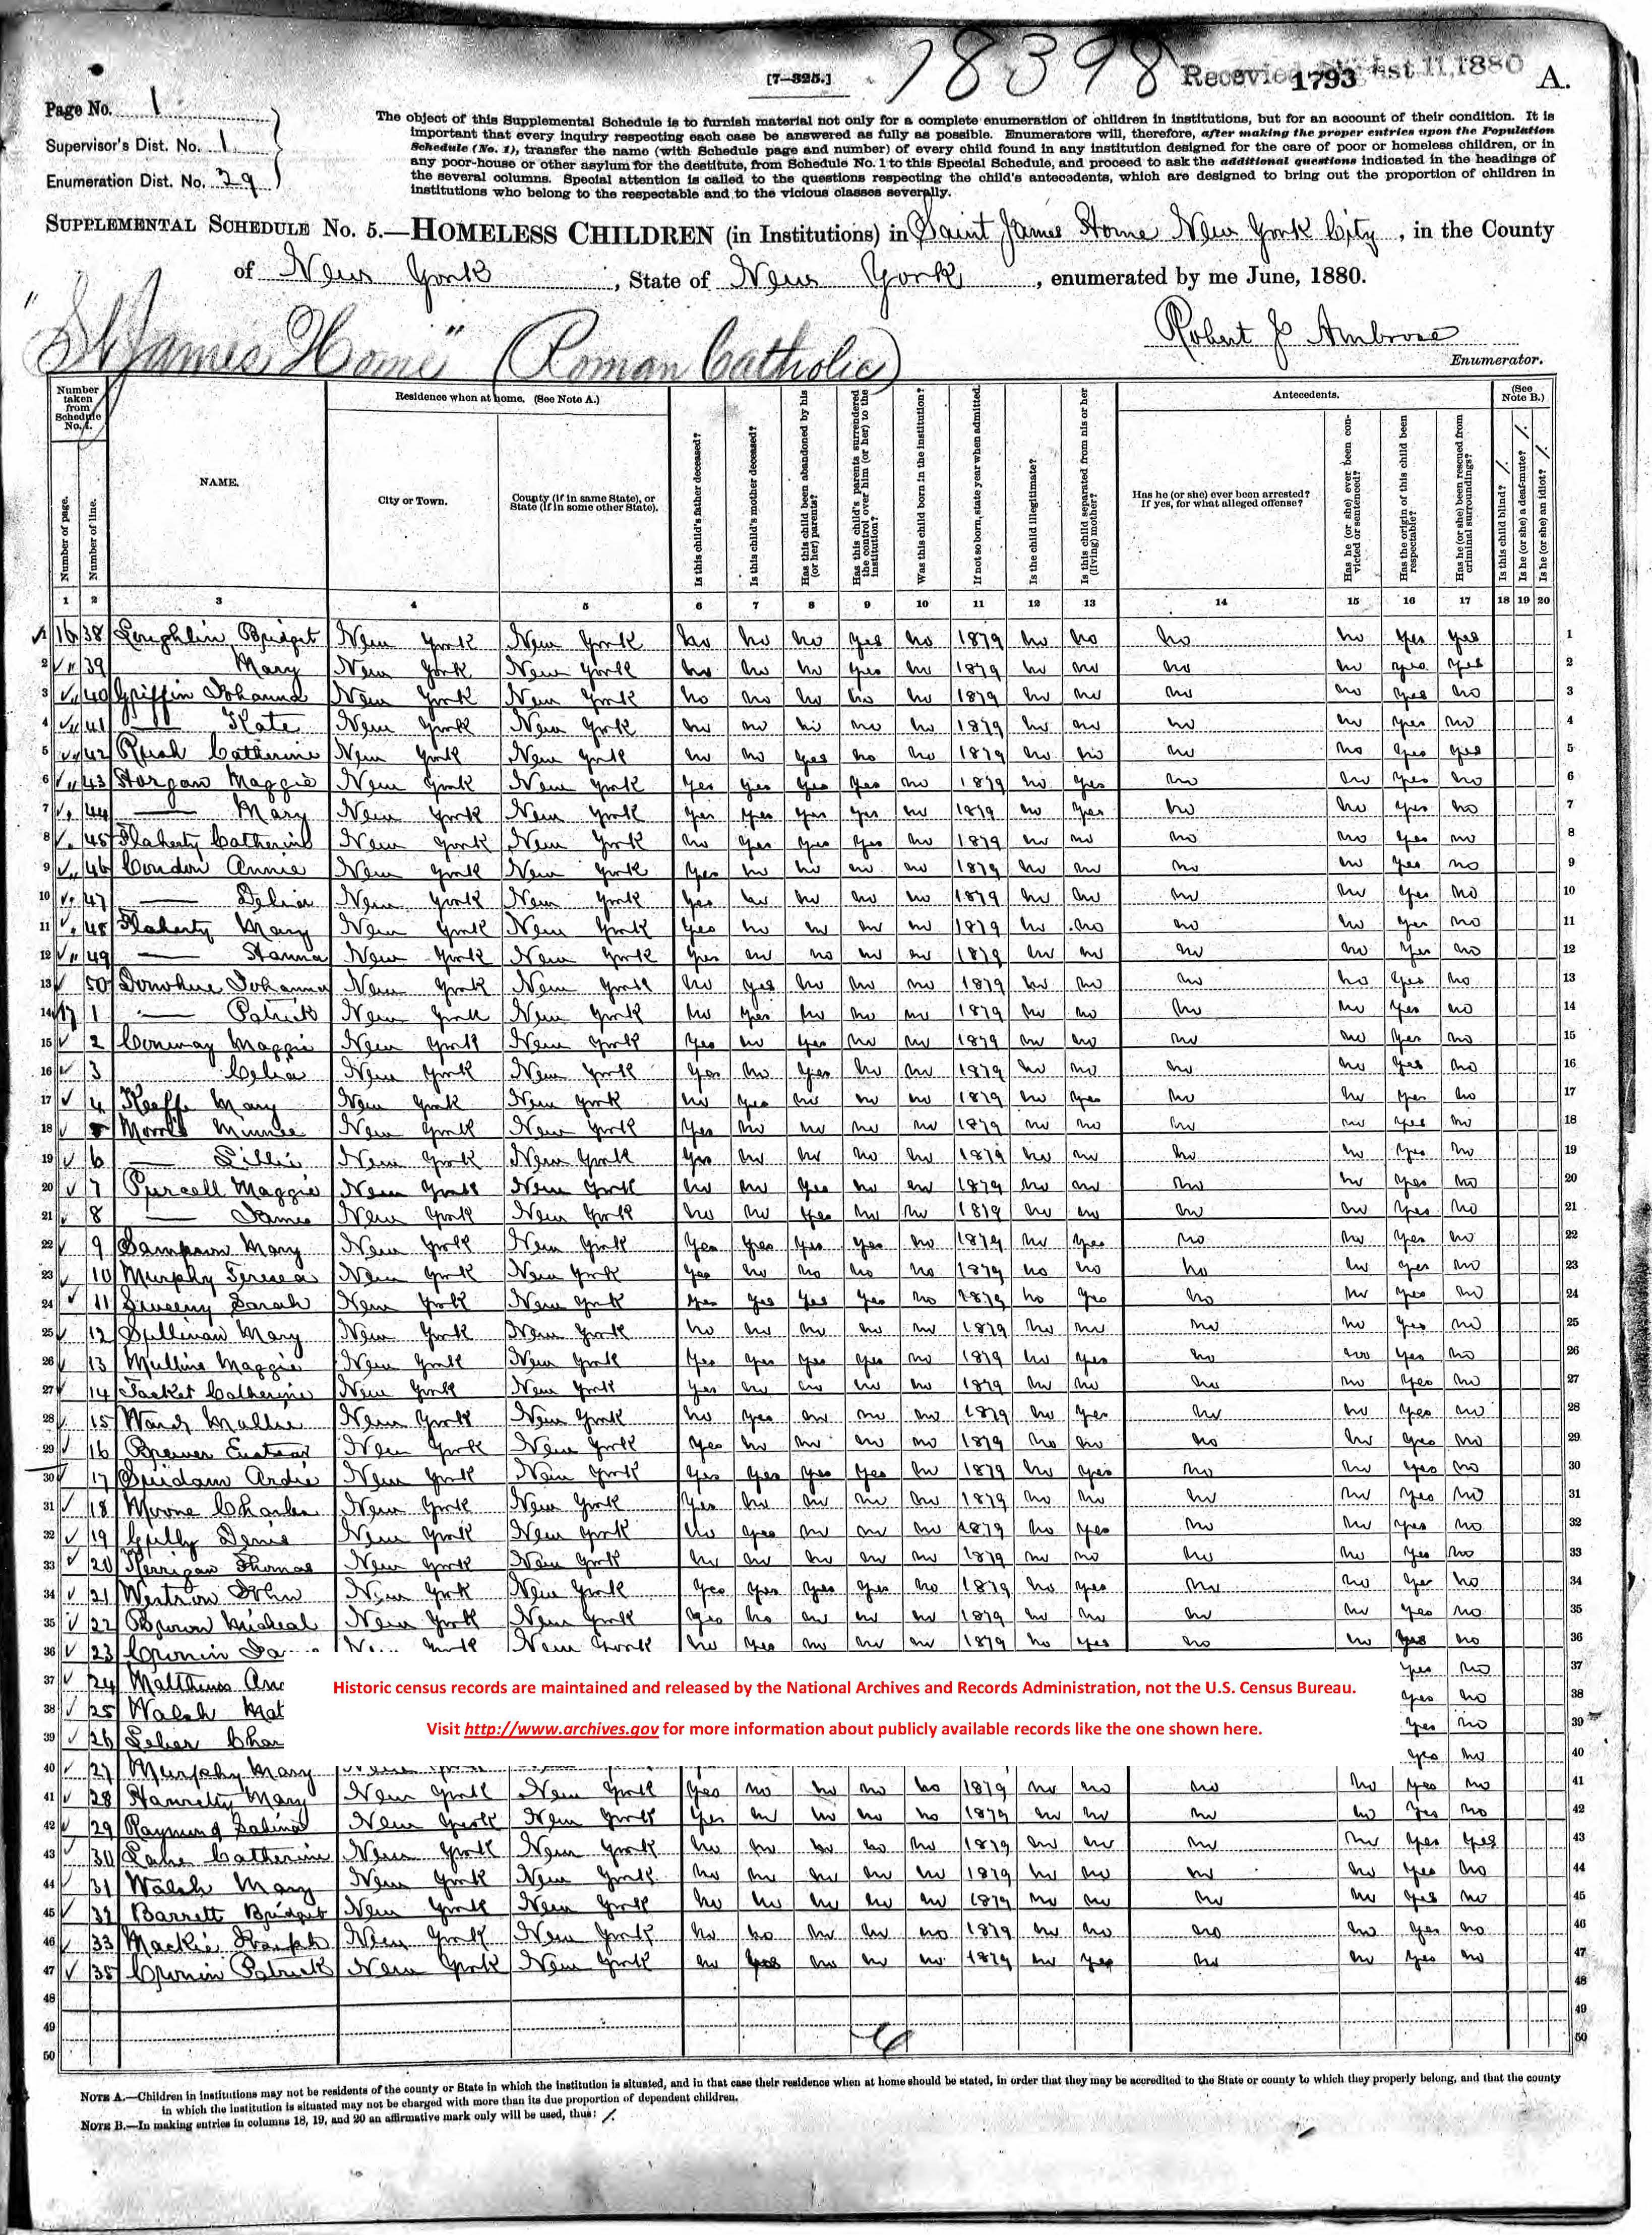 1880 Supplemental Schedule for homeless children